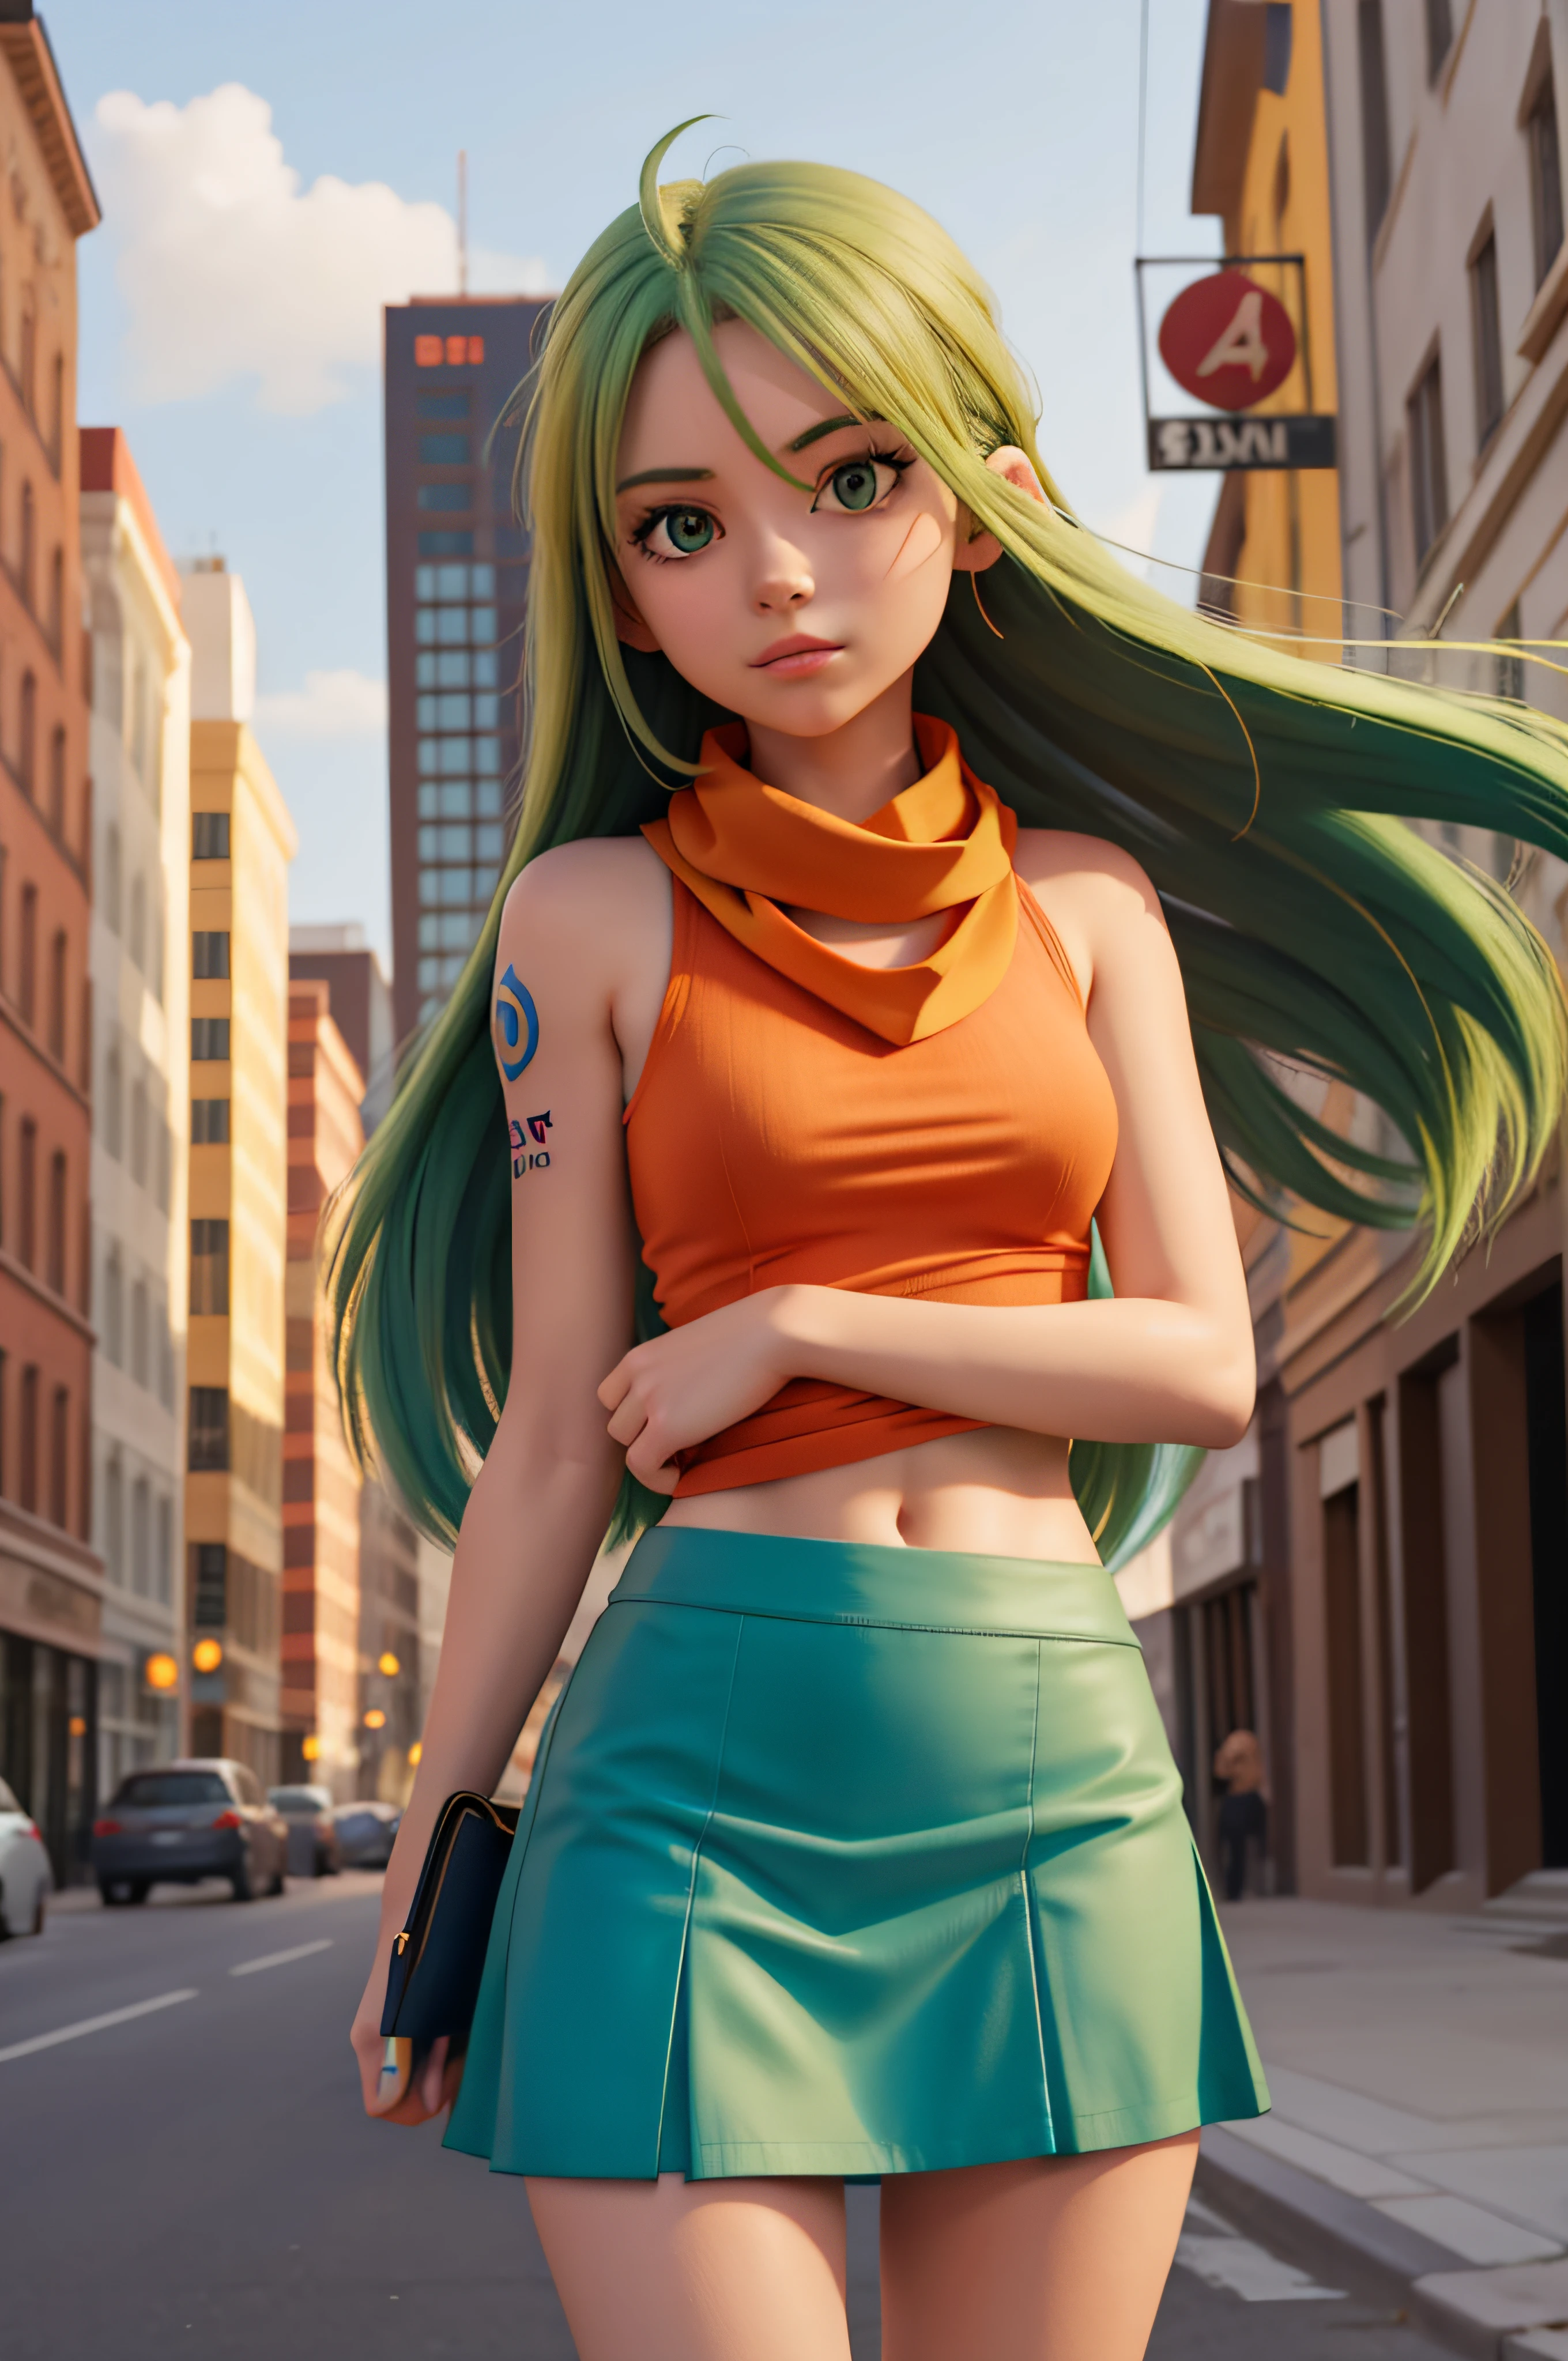 1 girl, 20 years old, long green hair, short orange shirt, blue mini skirt, scarf around neck, city, tattoo on arm